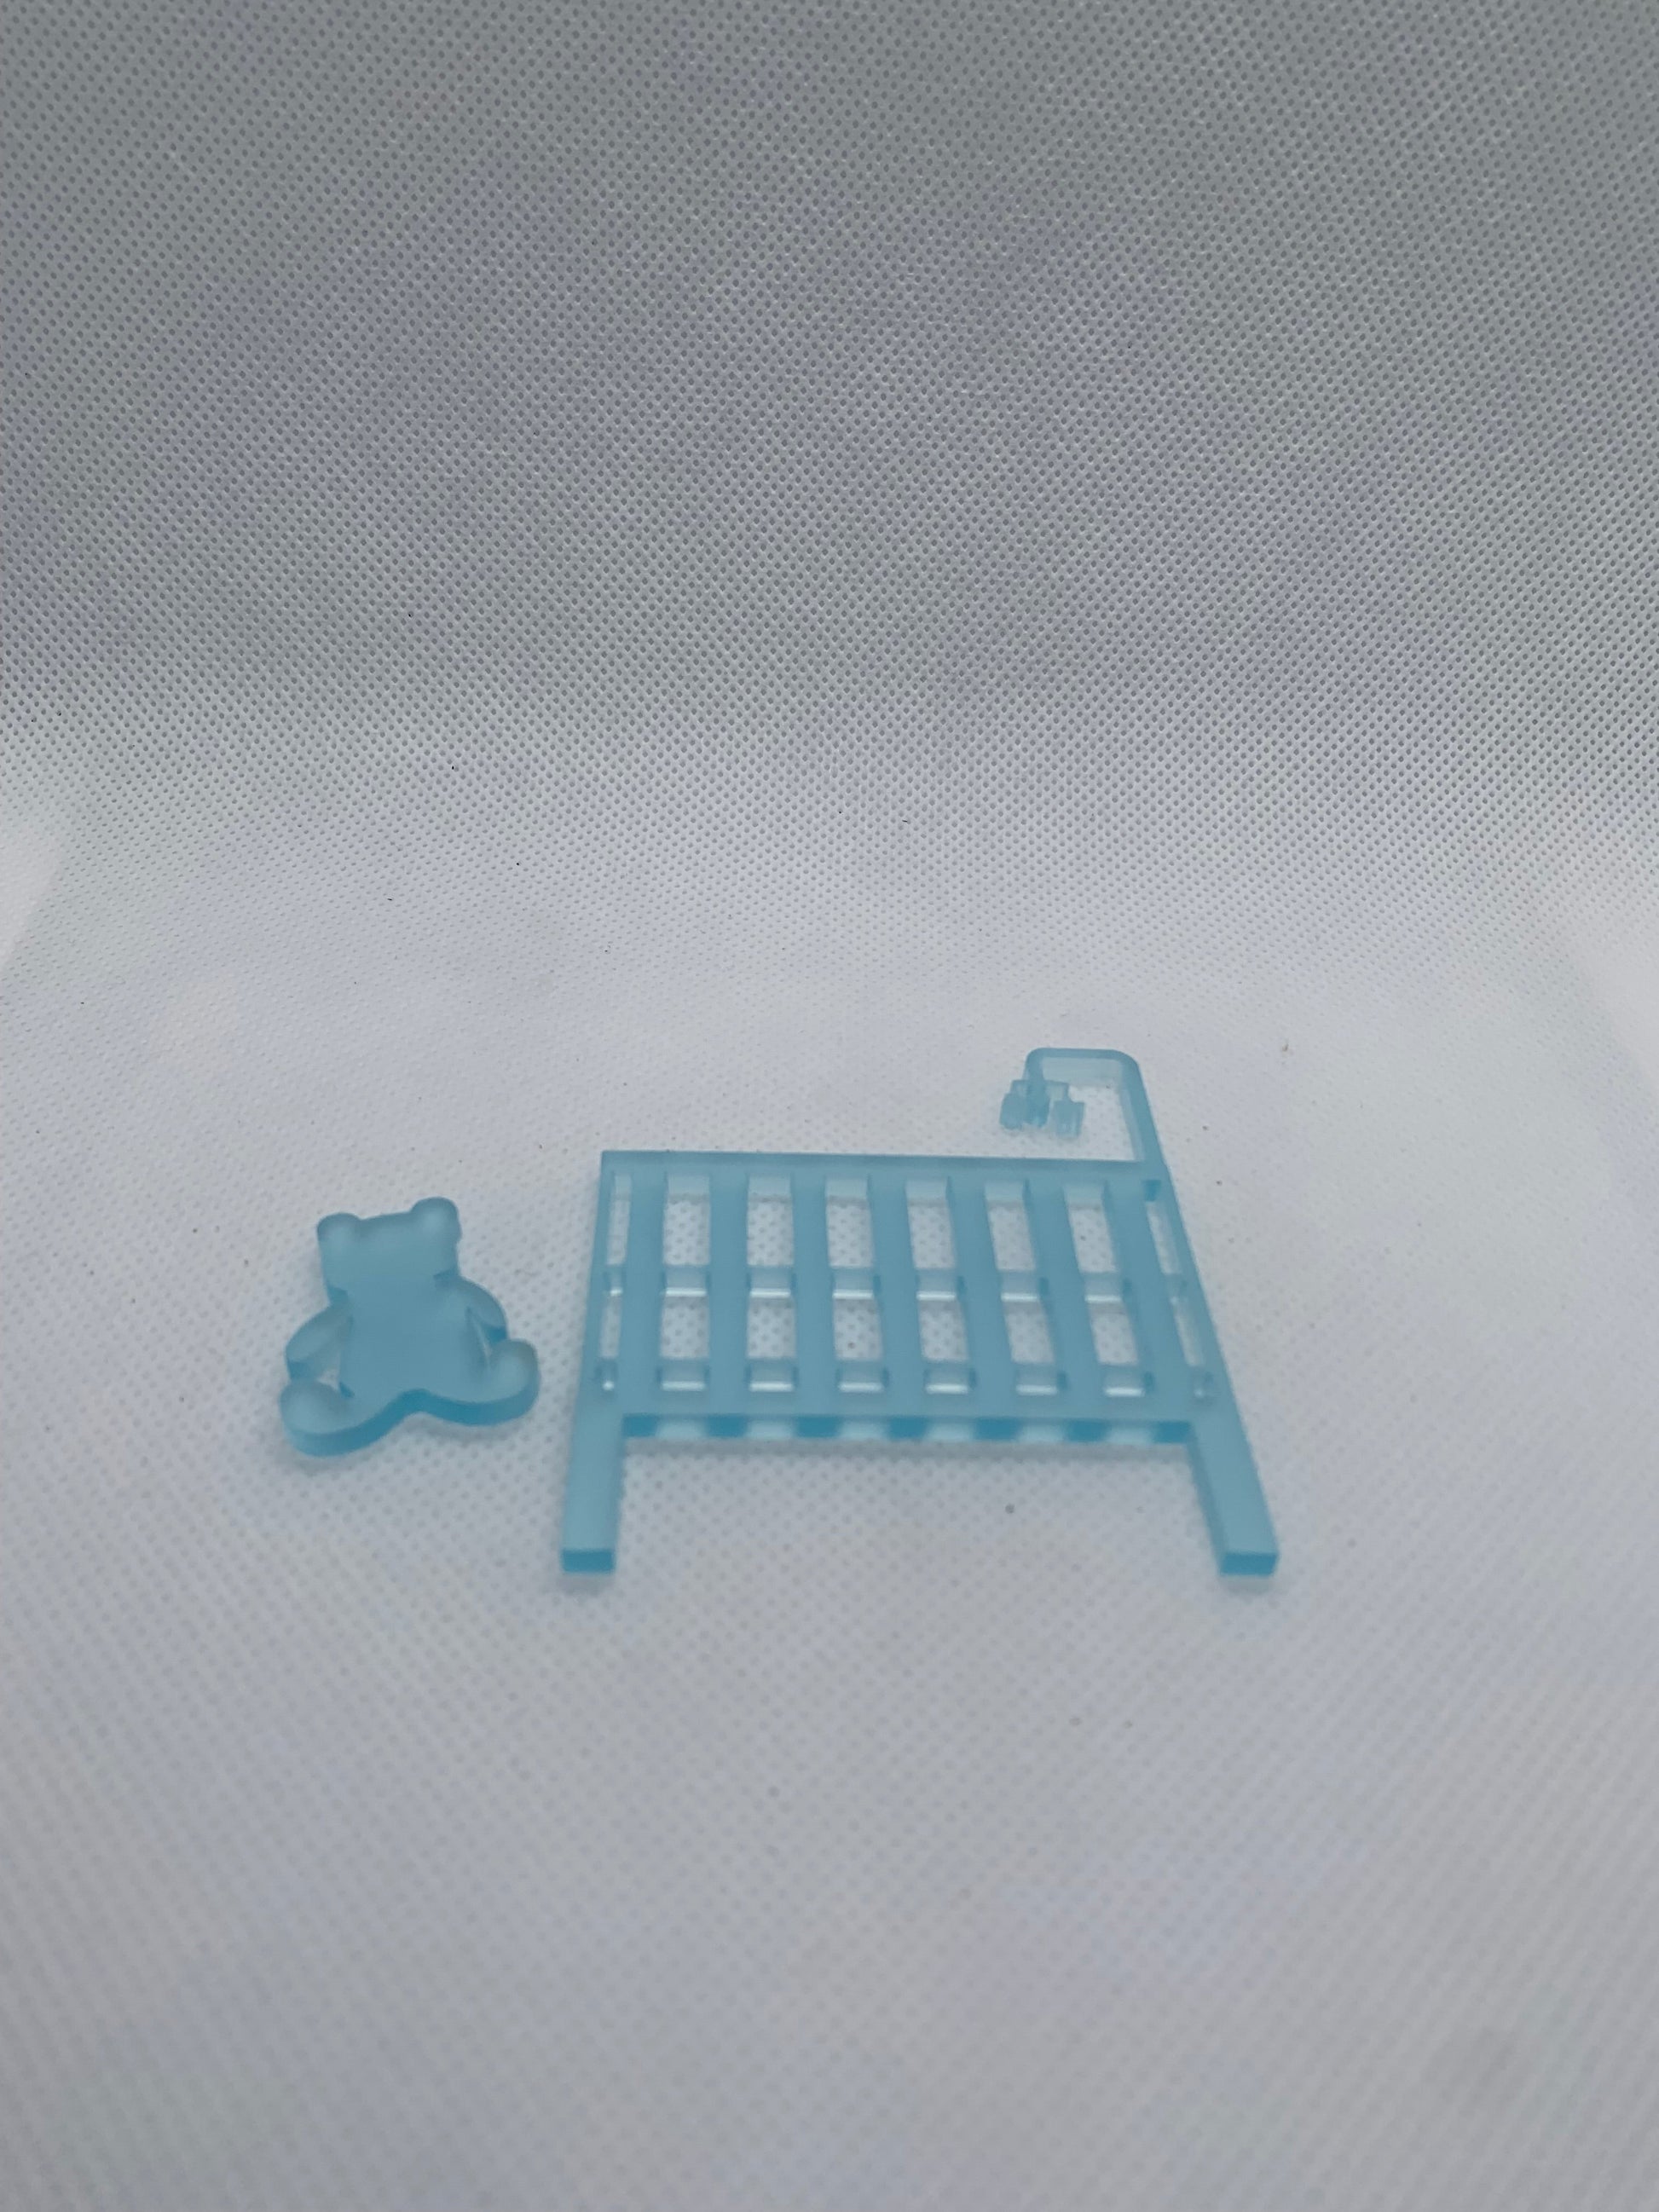 Baby crib and teddy bear set - blue - Creative Designs By Kari